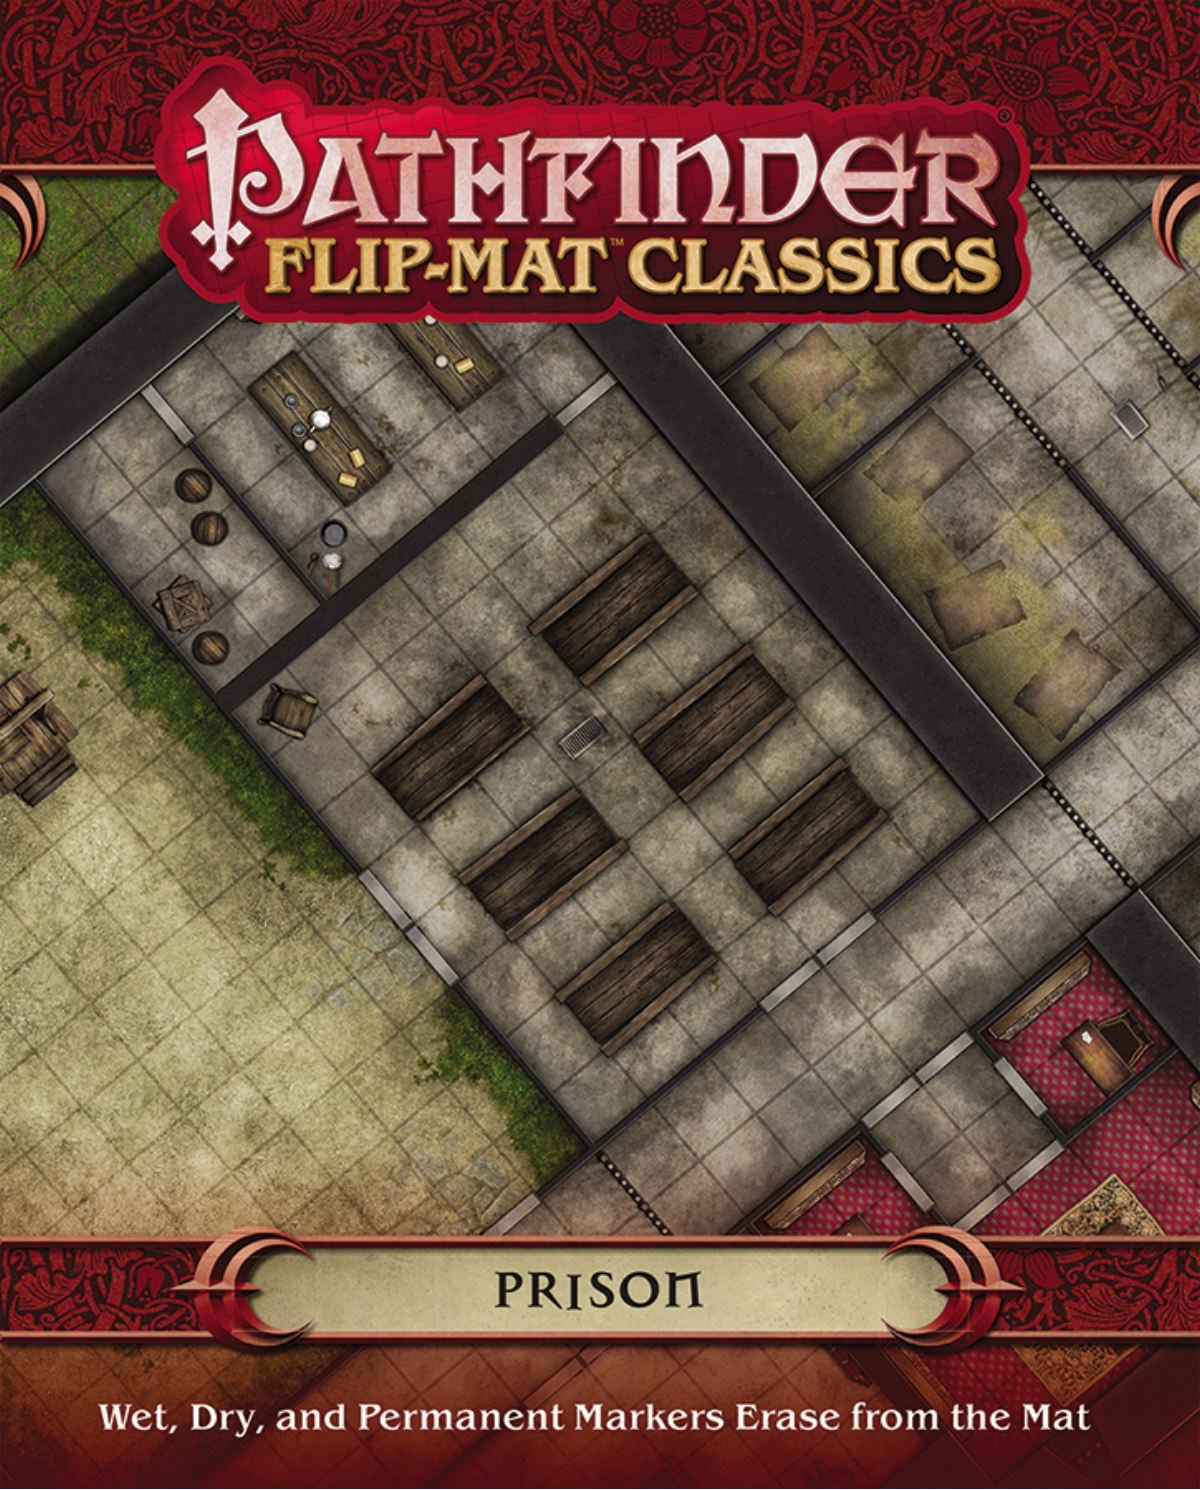 (BSG Certified USED) Pathfinder: RPG - Flip-Mat Classics: Prison